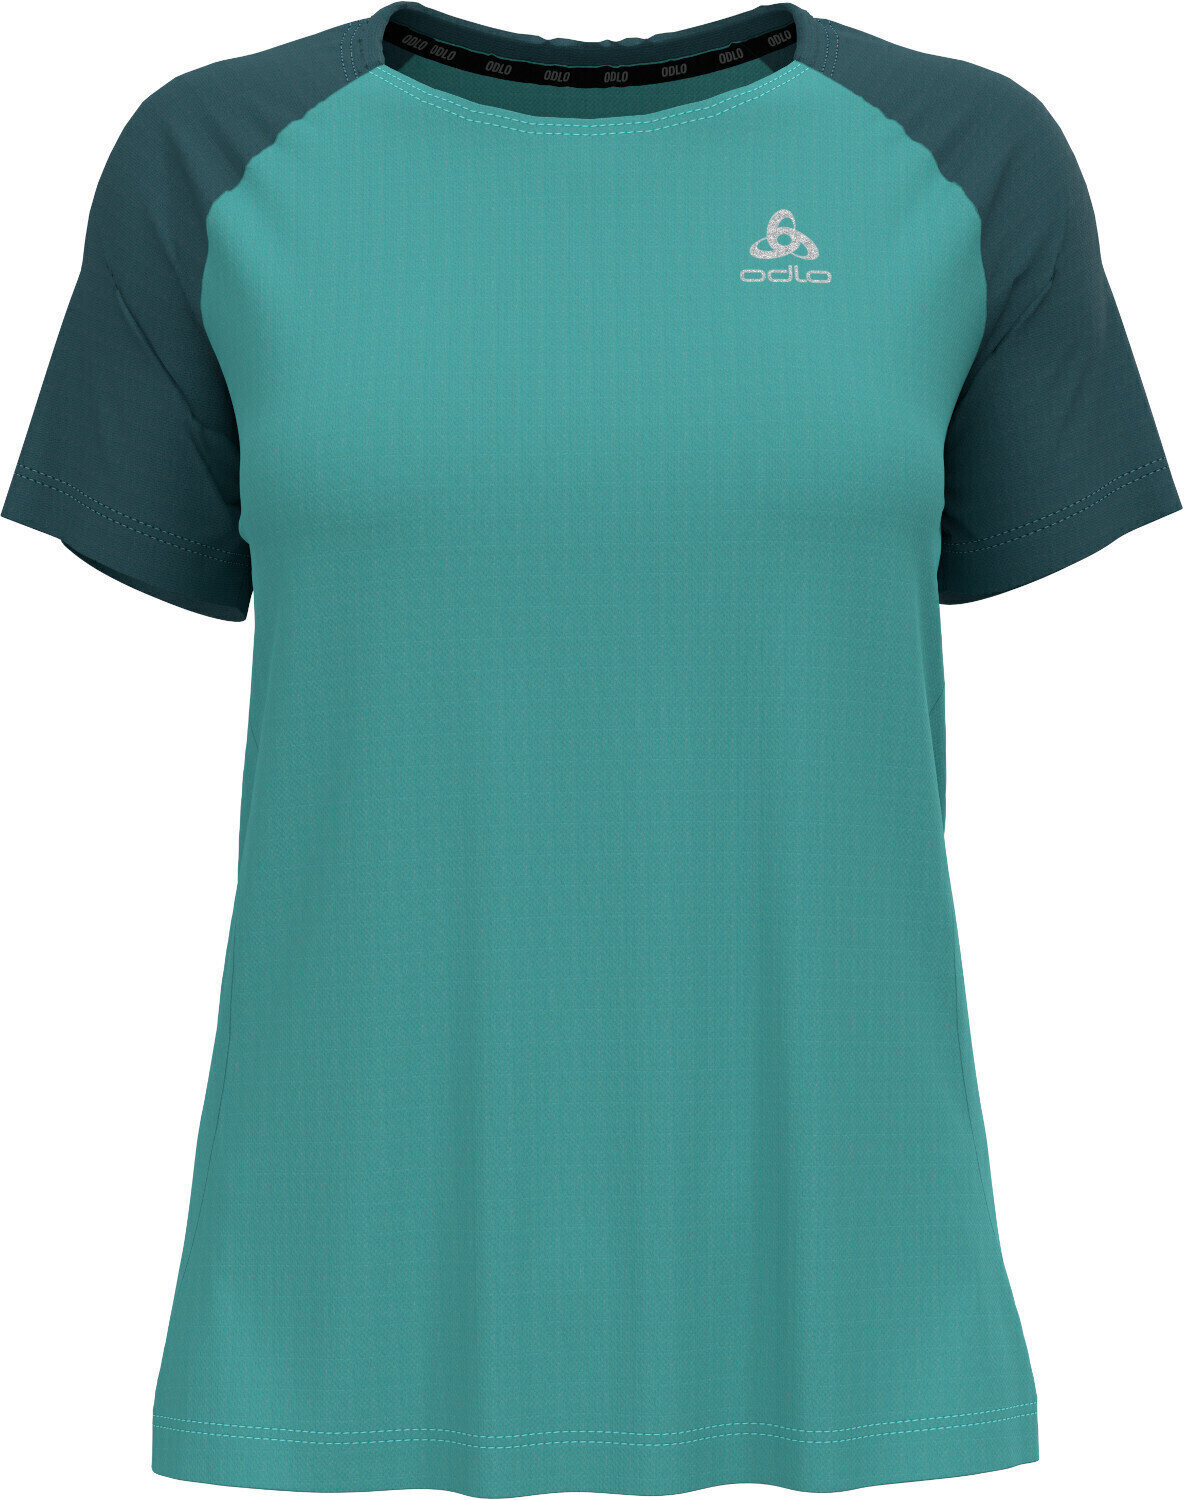 Běžecké tričko s krátkým rukávem
 Odlo Essential T-Shirt Jaded/Balsam L Běžecké tričko s krátkým rukávem